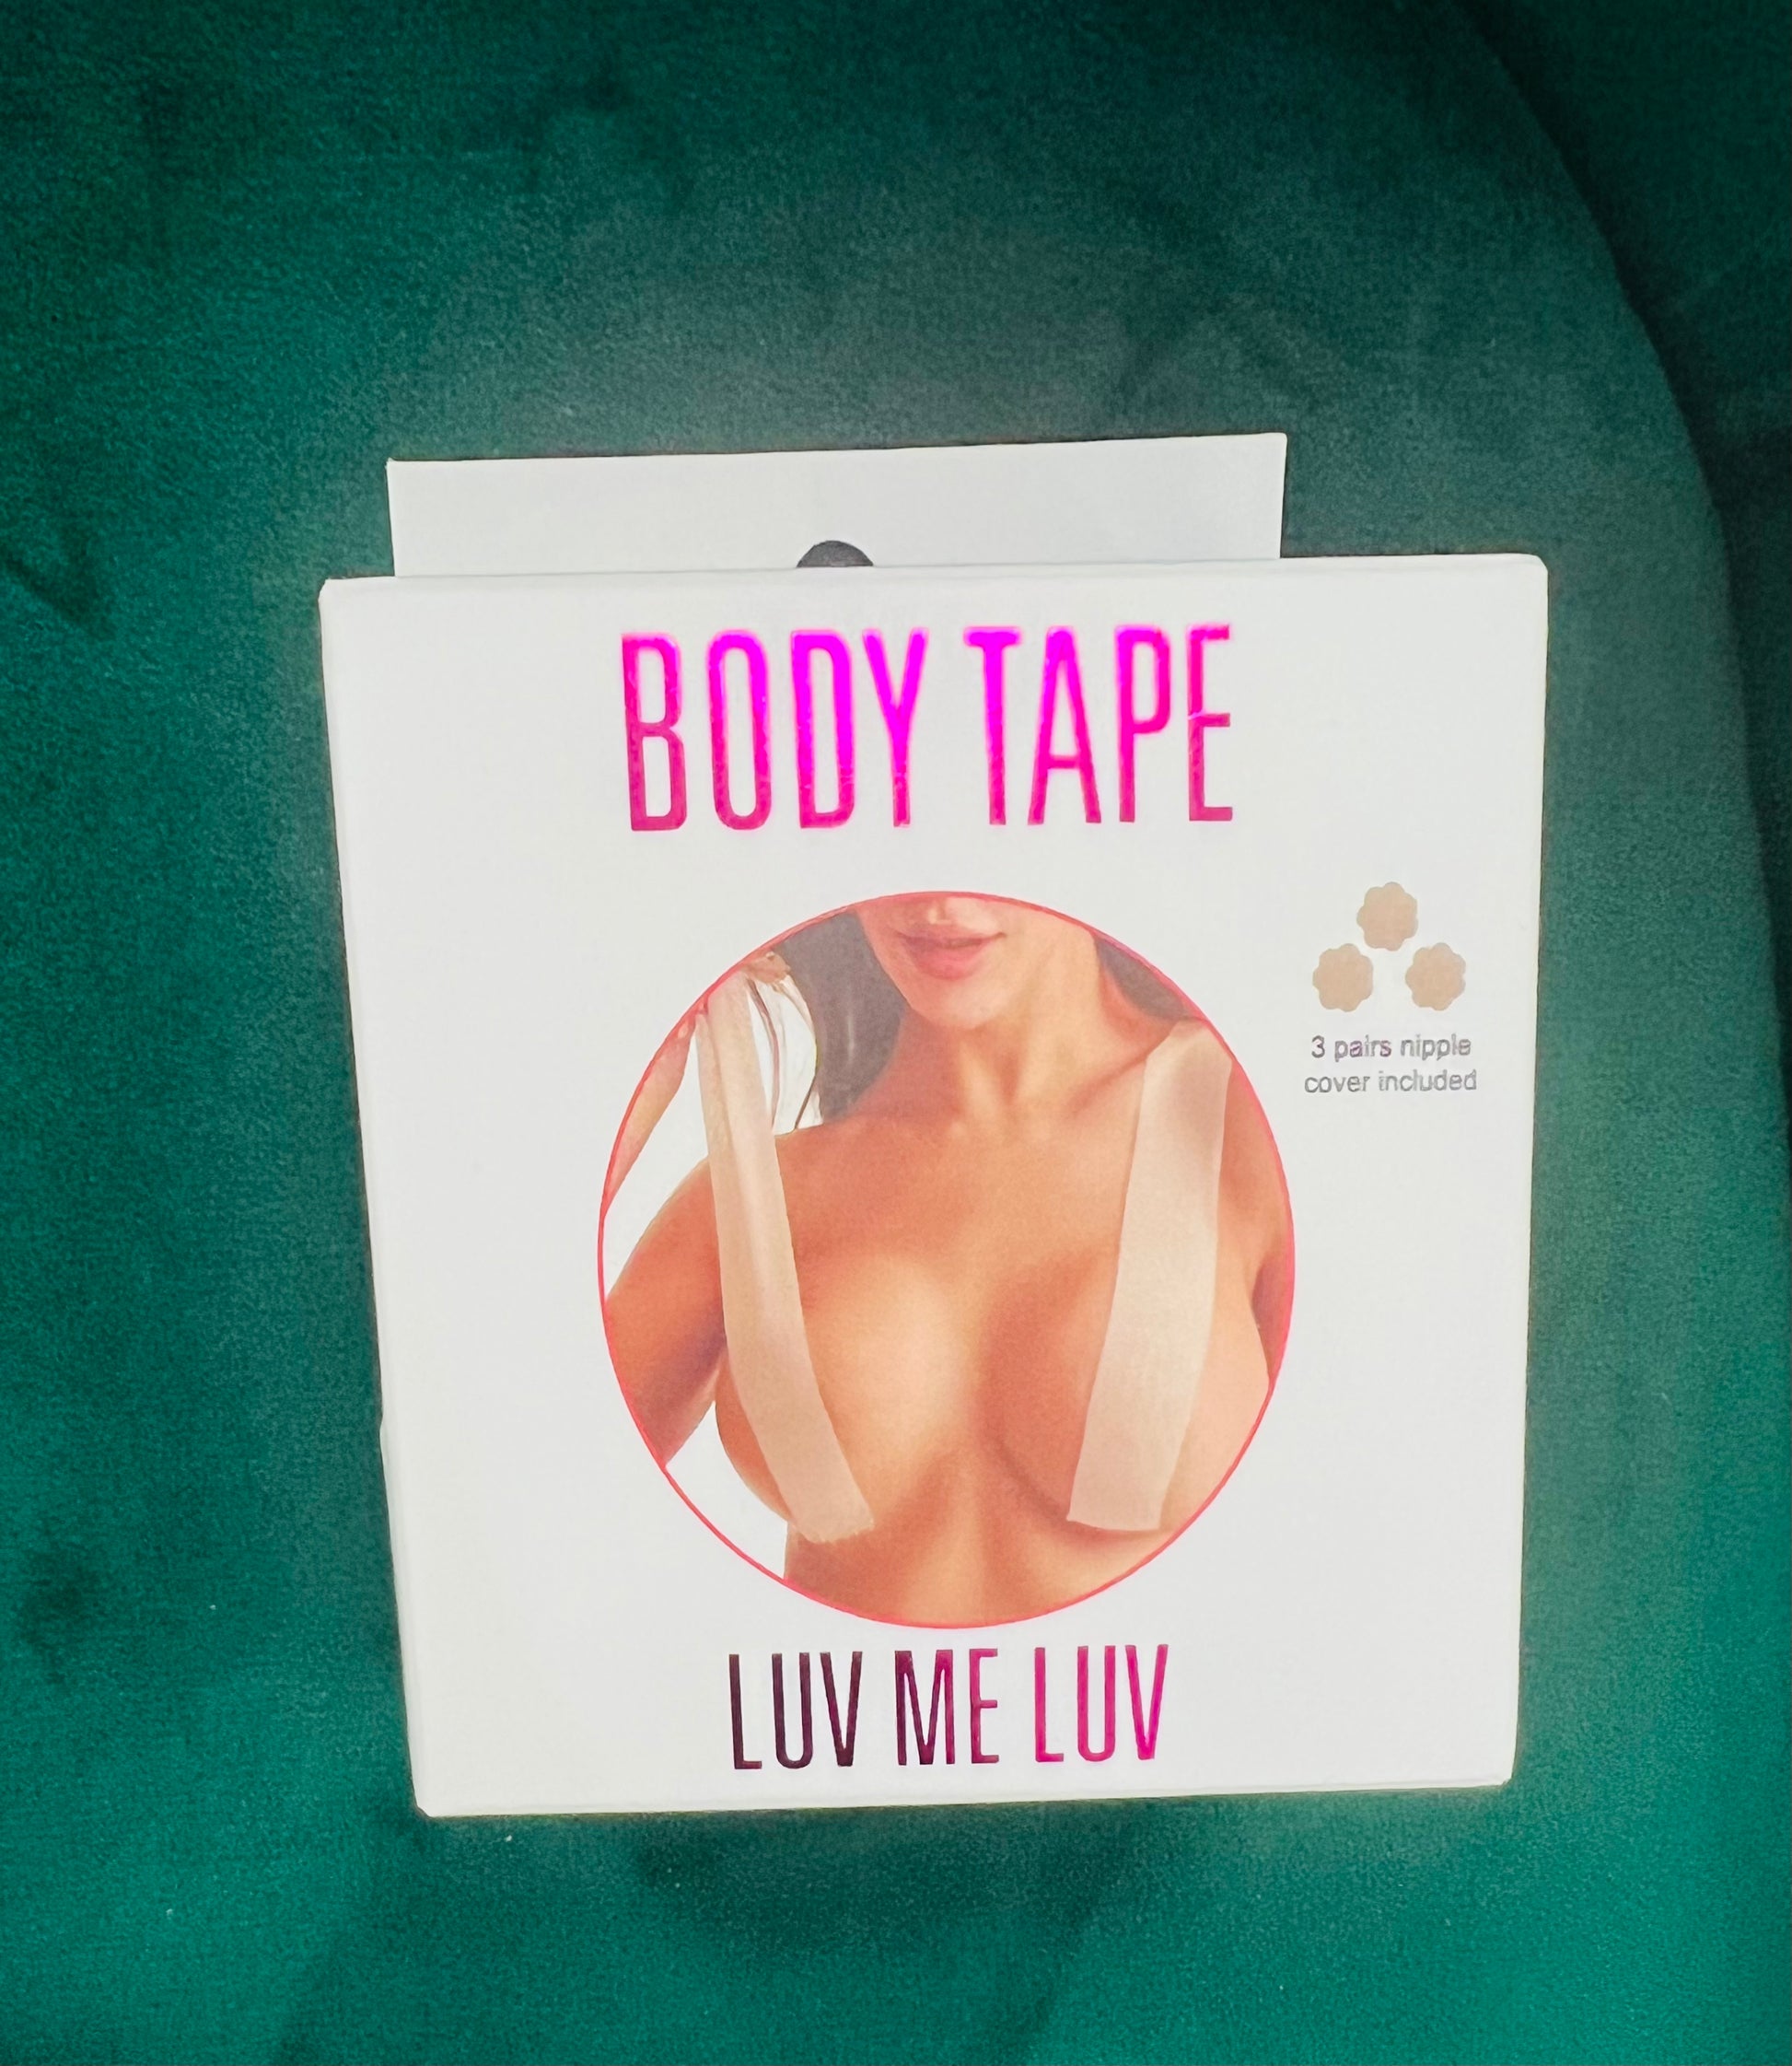 free bra body tape